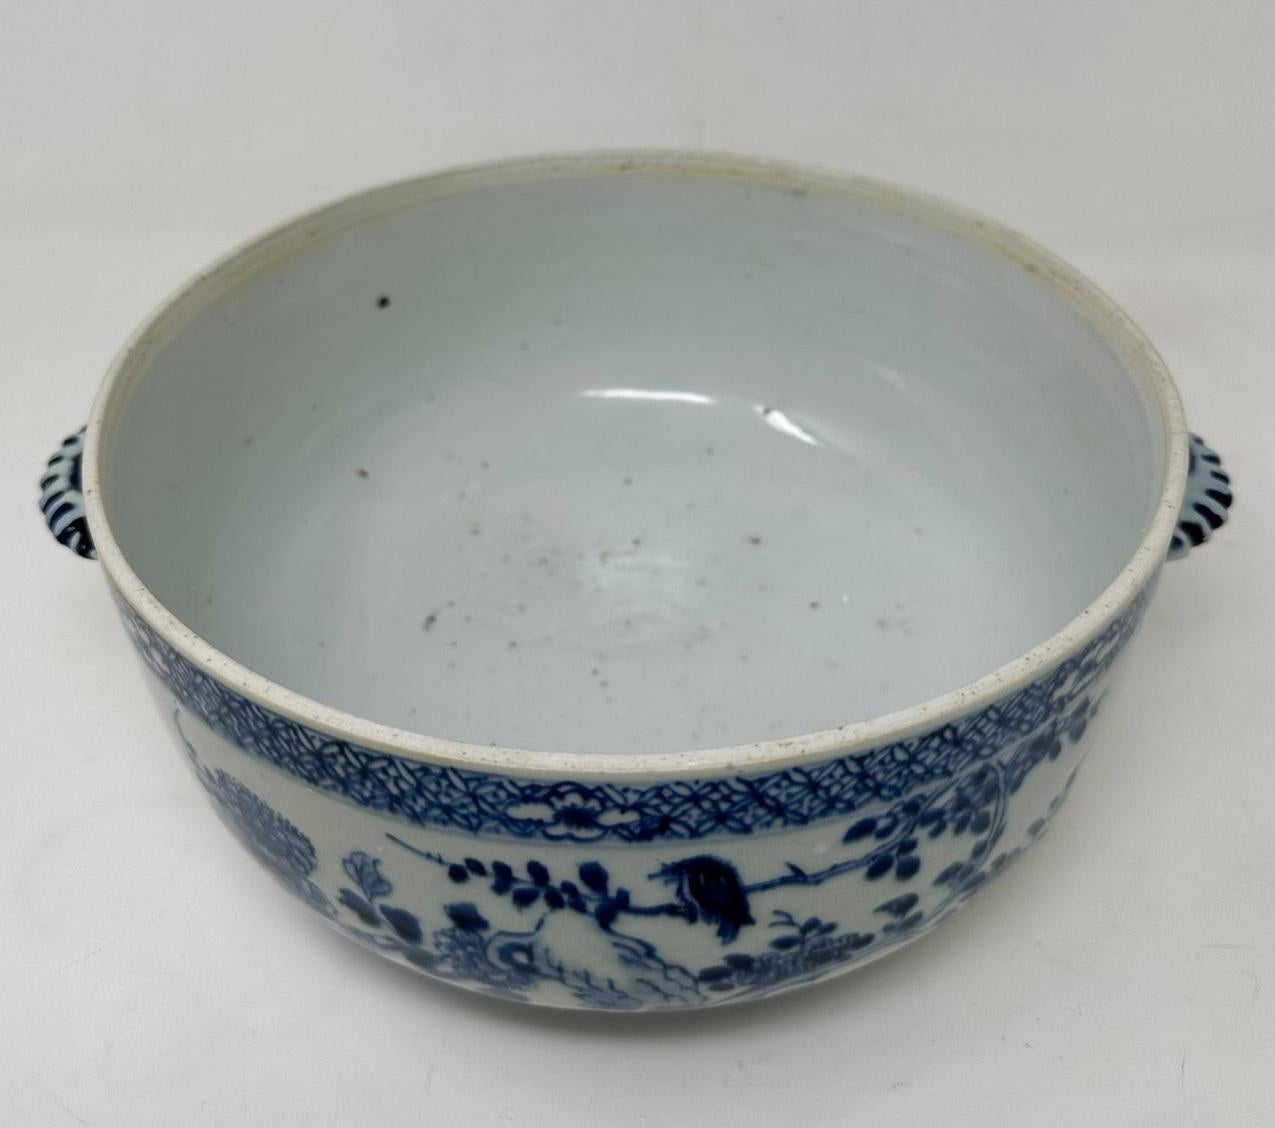 Antique Chinese Export Porcelain Blue White Chien Lung Soup Tureen Centerpiece For Sale 3